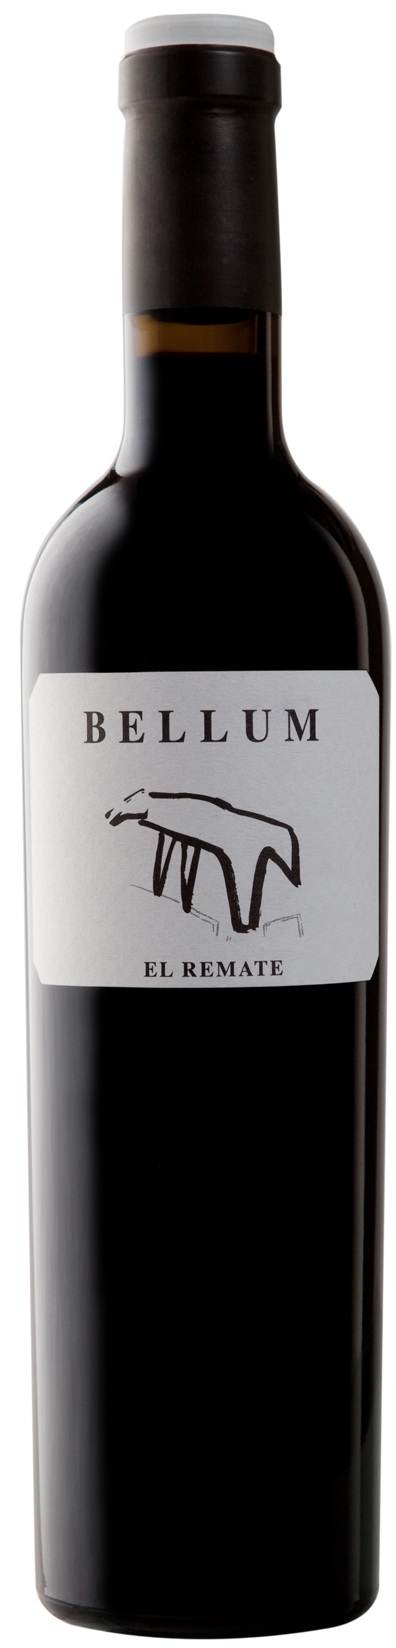 Image of Wine bottle Bellum "El Remate"